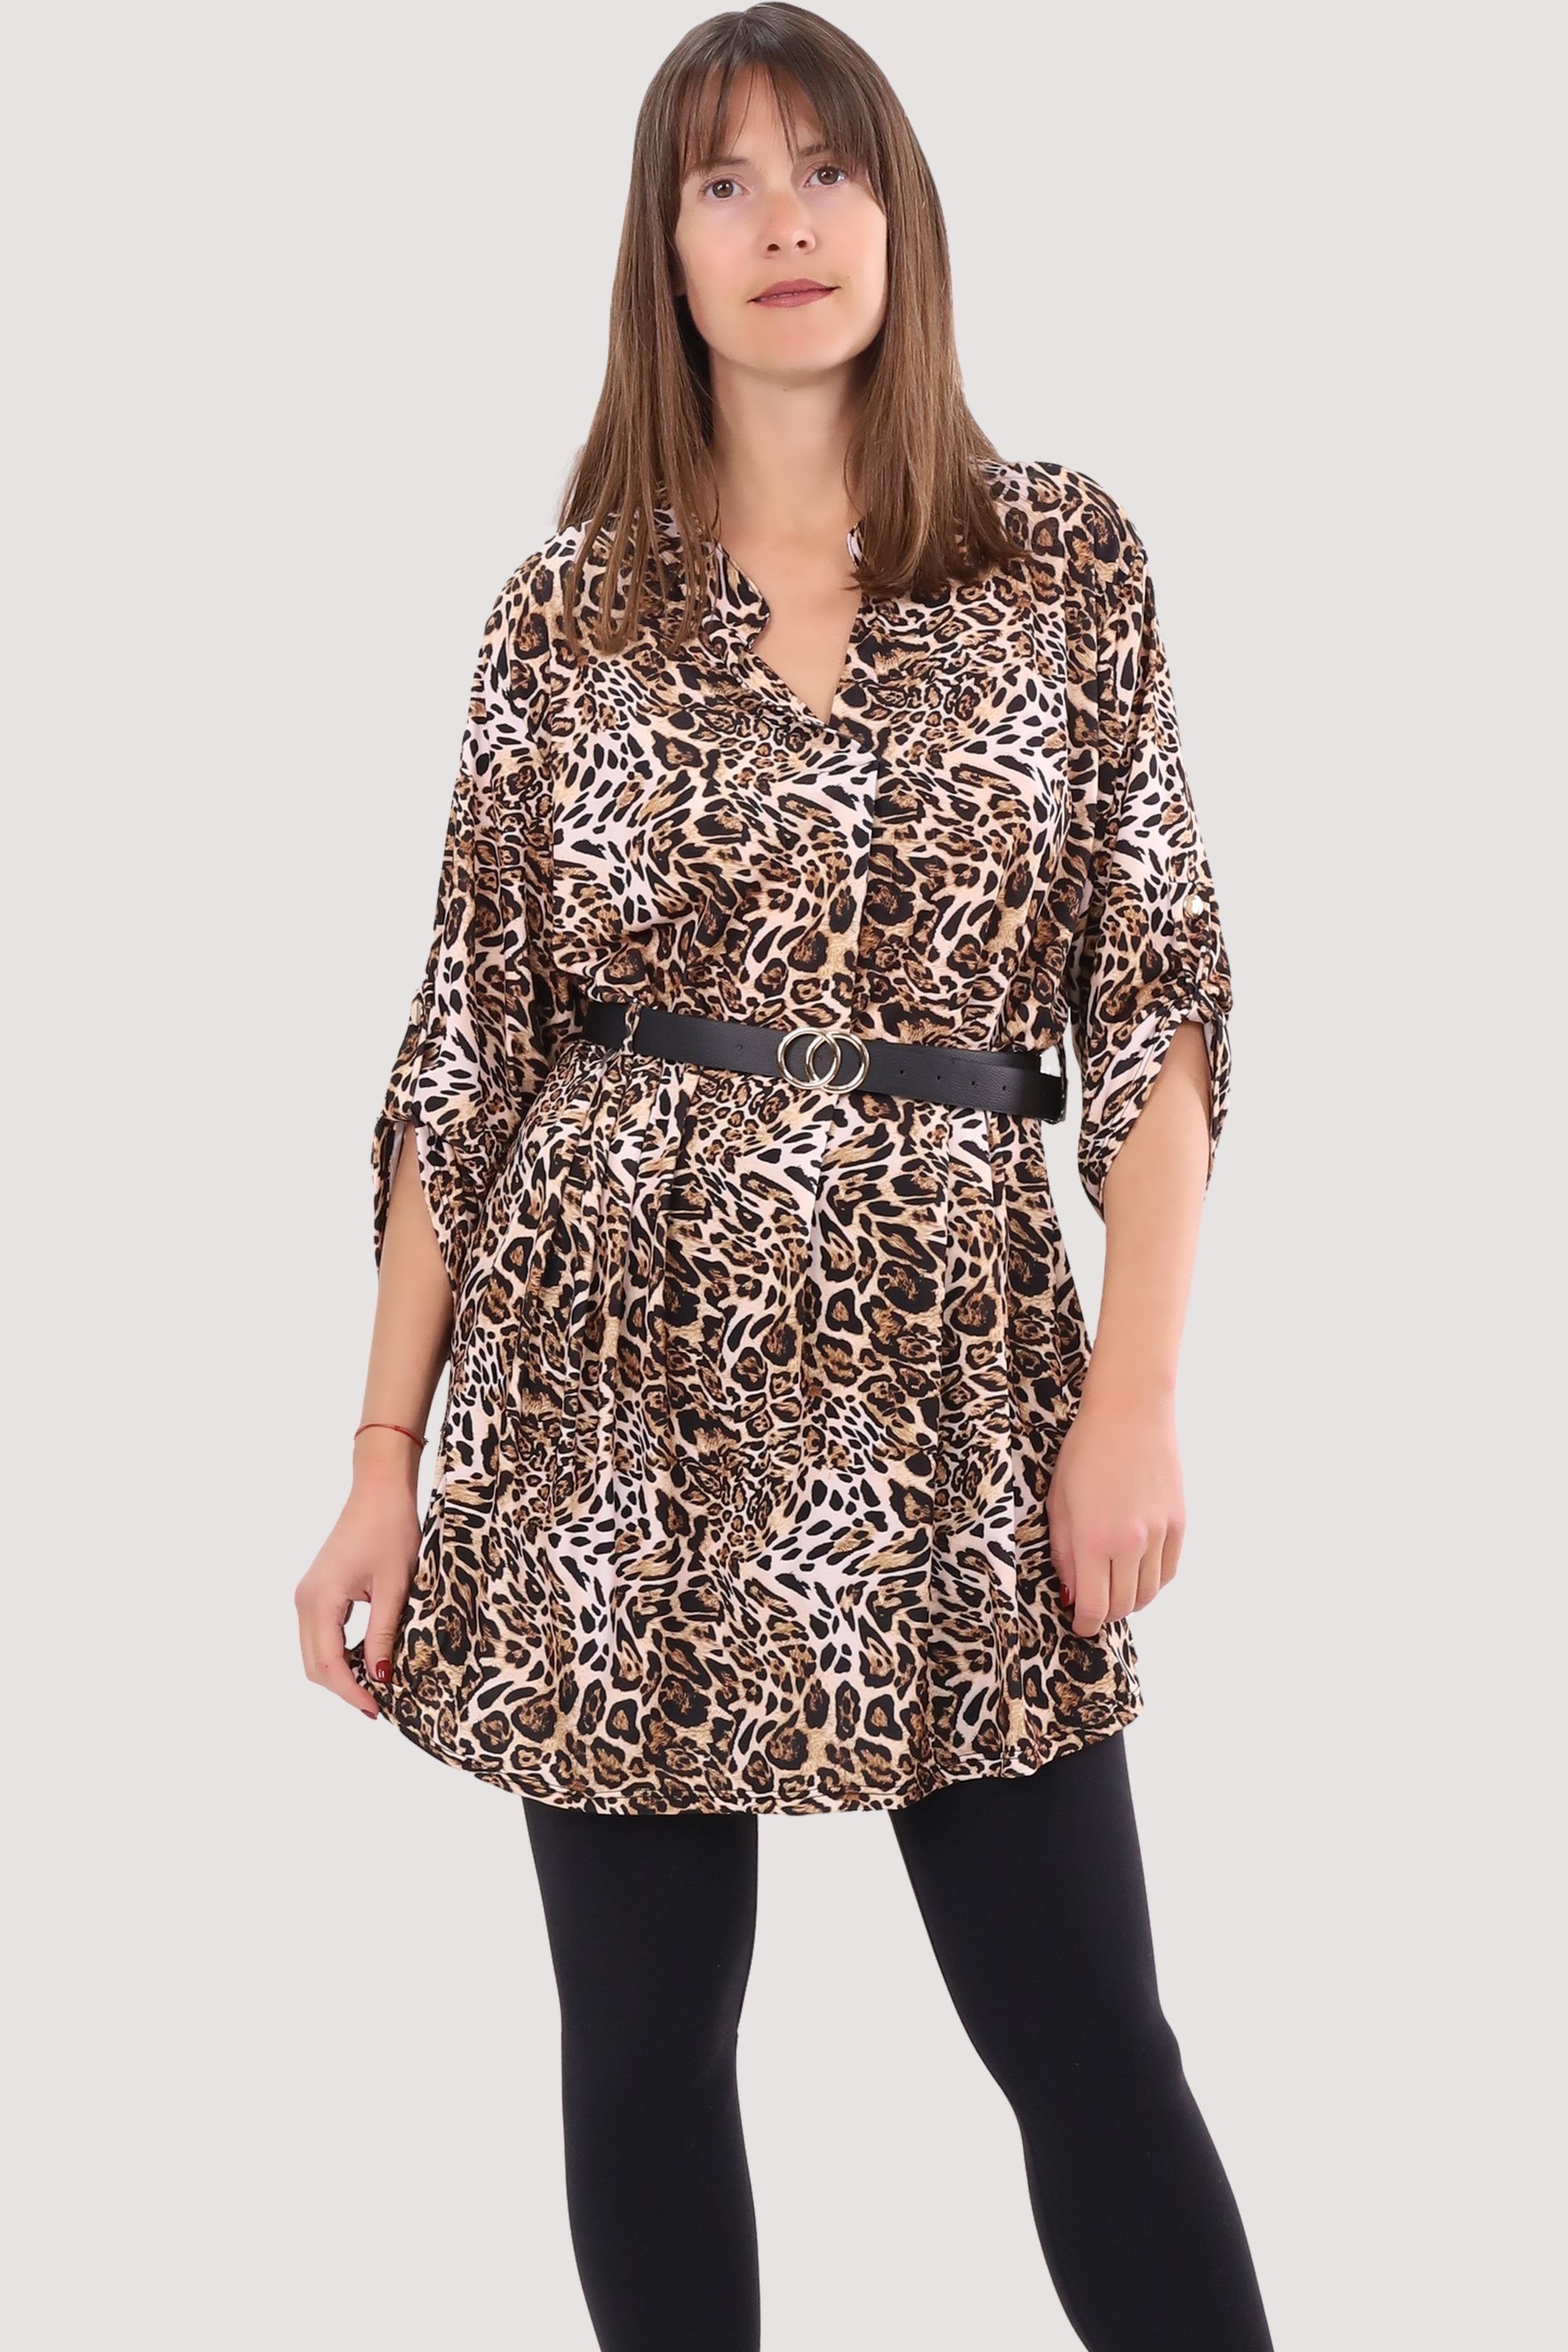 Kleid Druckkleid mit malito Jaguar Tunika Einheitsgröße 2 than fashion Bluse Animalprint 23203 more Gürtel